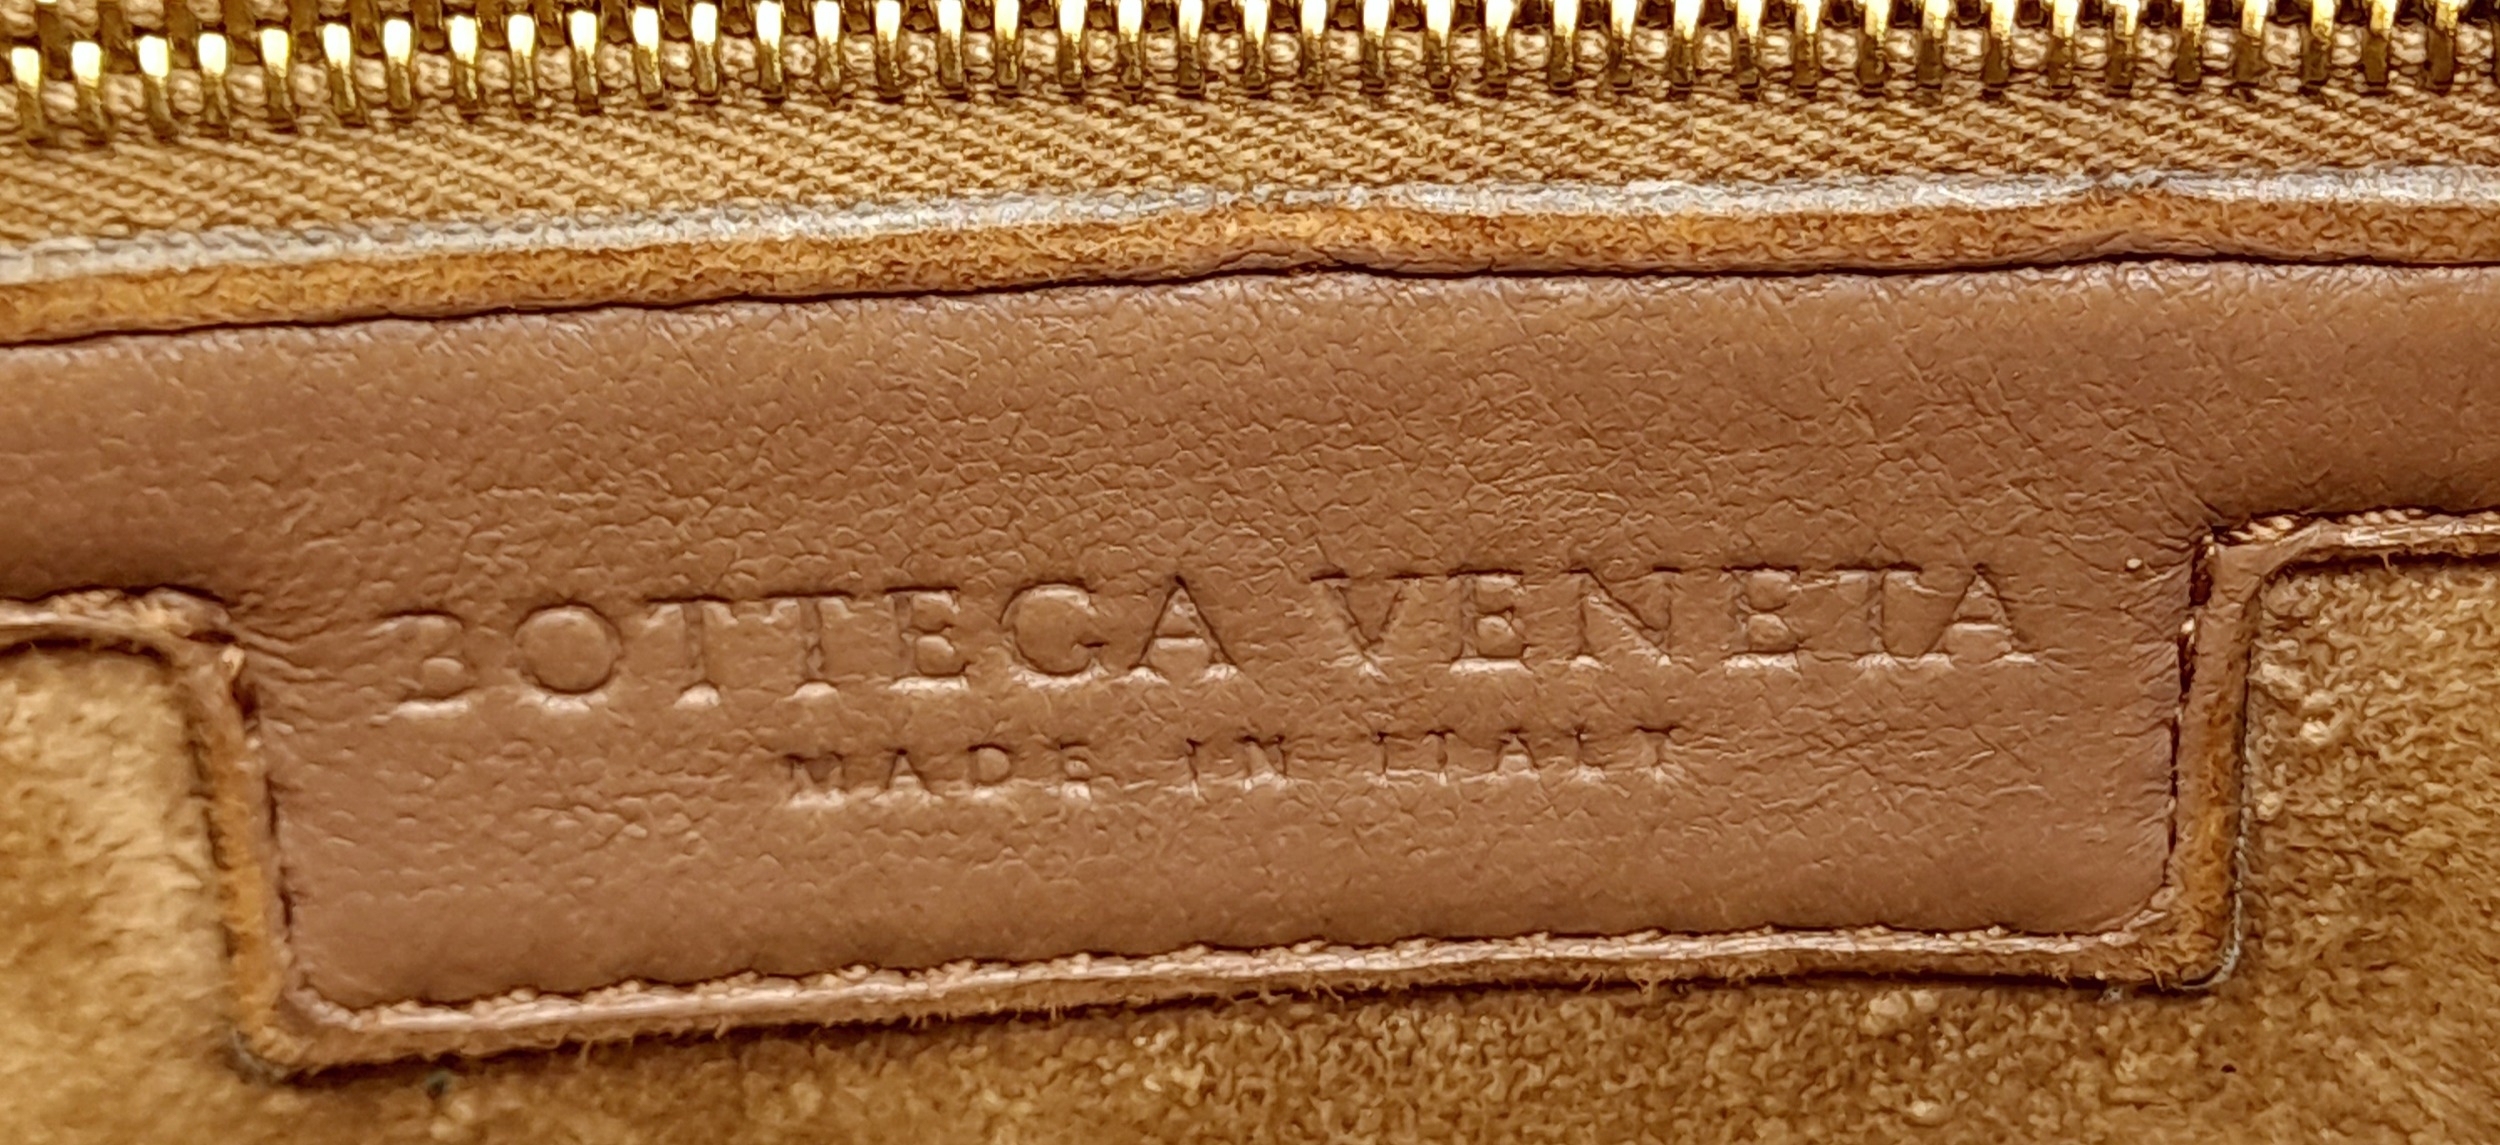 A Bottega Veneta Brown Bag. Intrecciato leather exterior with gold-toned hardware, single handle/ - Image 7 of 8